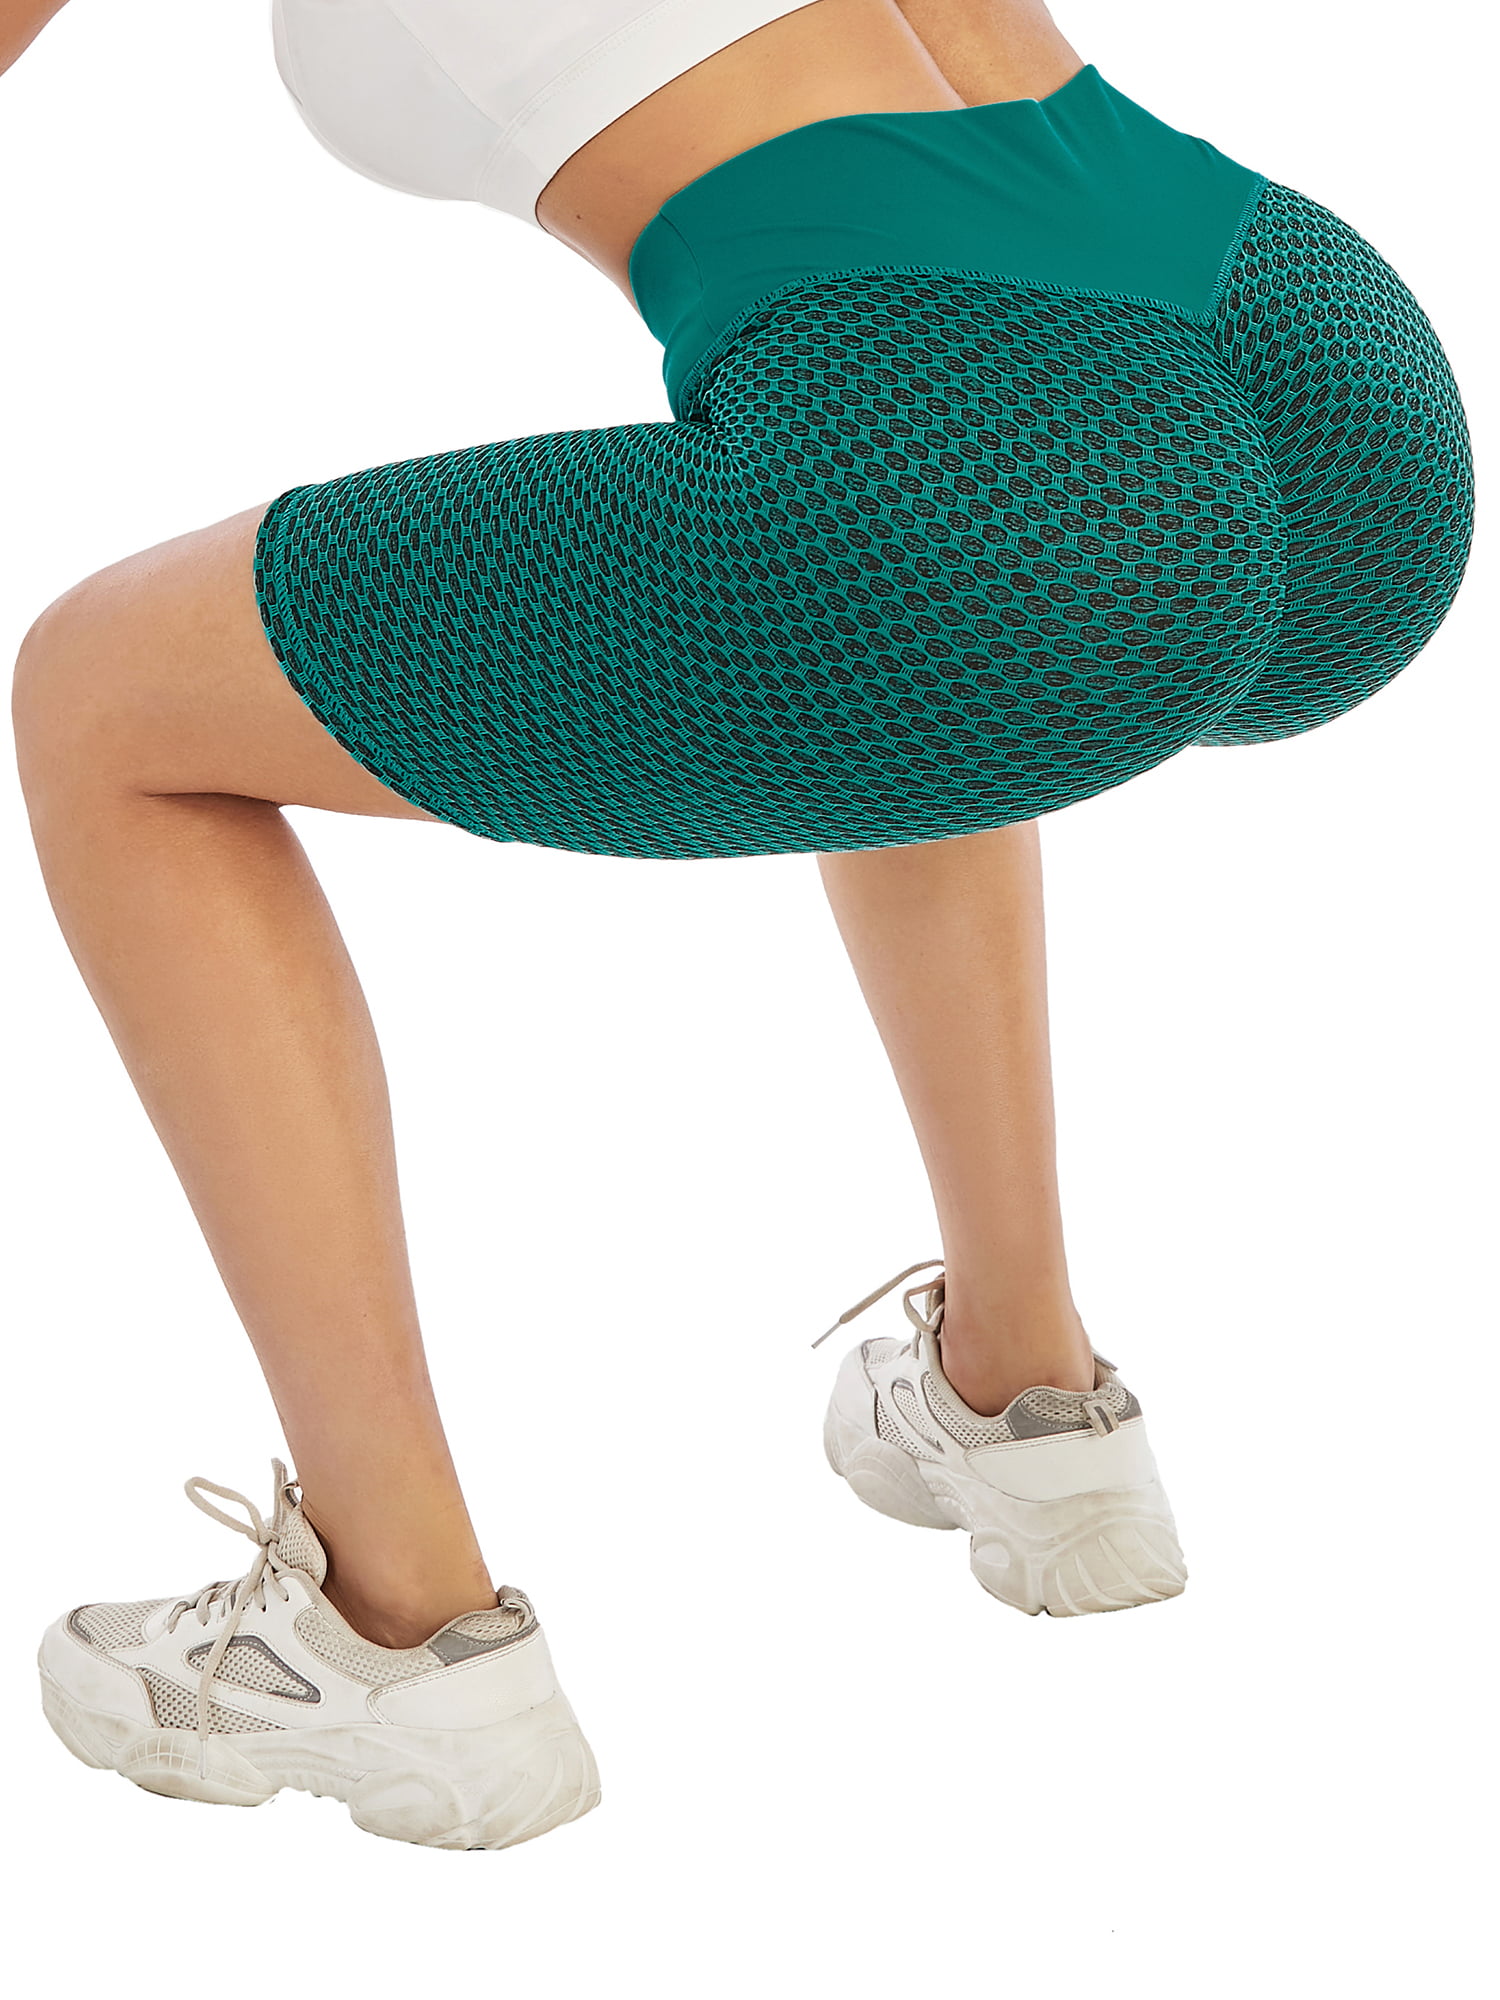 FANNYC Women's Yoga Shorts High Waist Fitness Activewear Biker Shorts Gym  Workout Shorts Abdomen Control Hips Yoga Half Pants Tights, 6 Colors,S-2XL